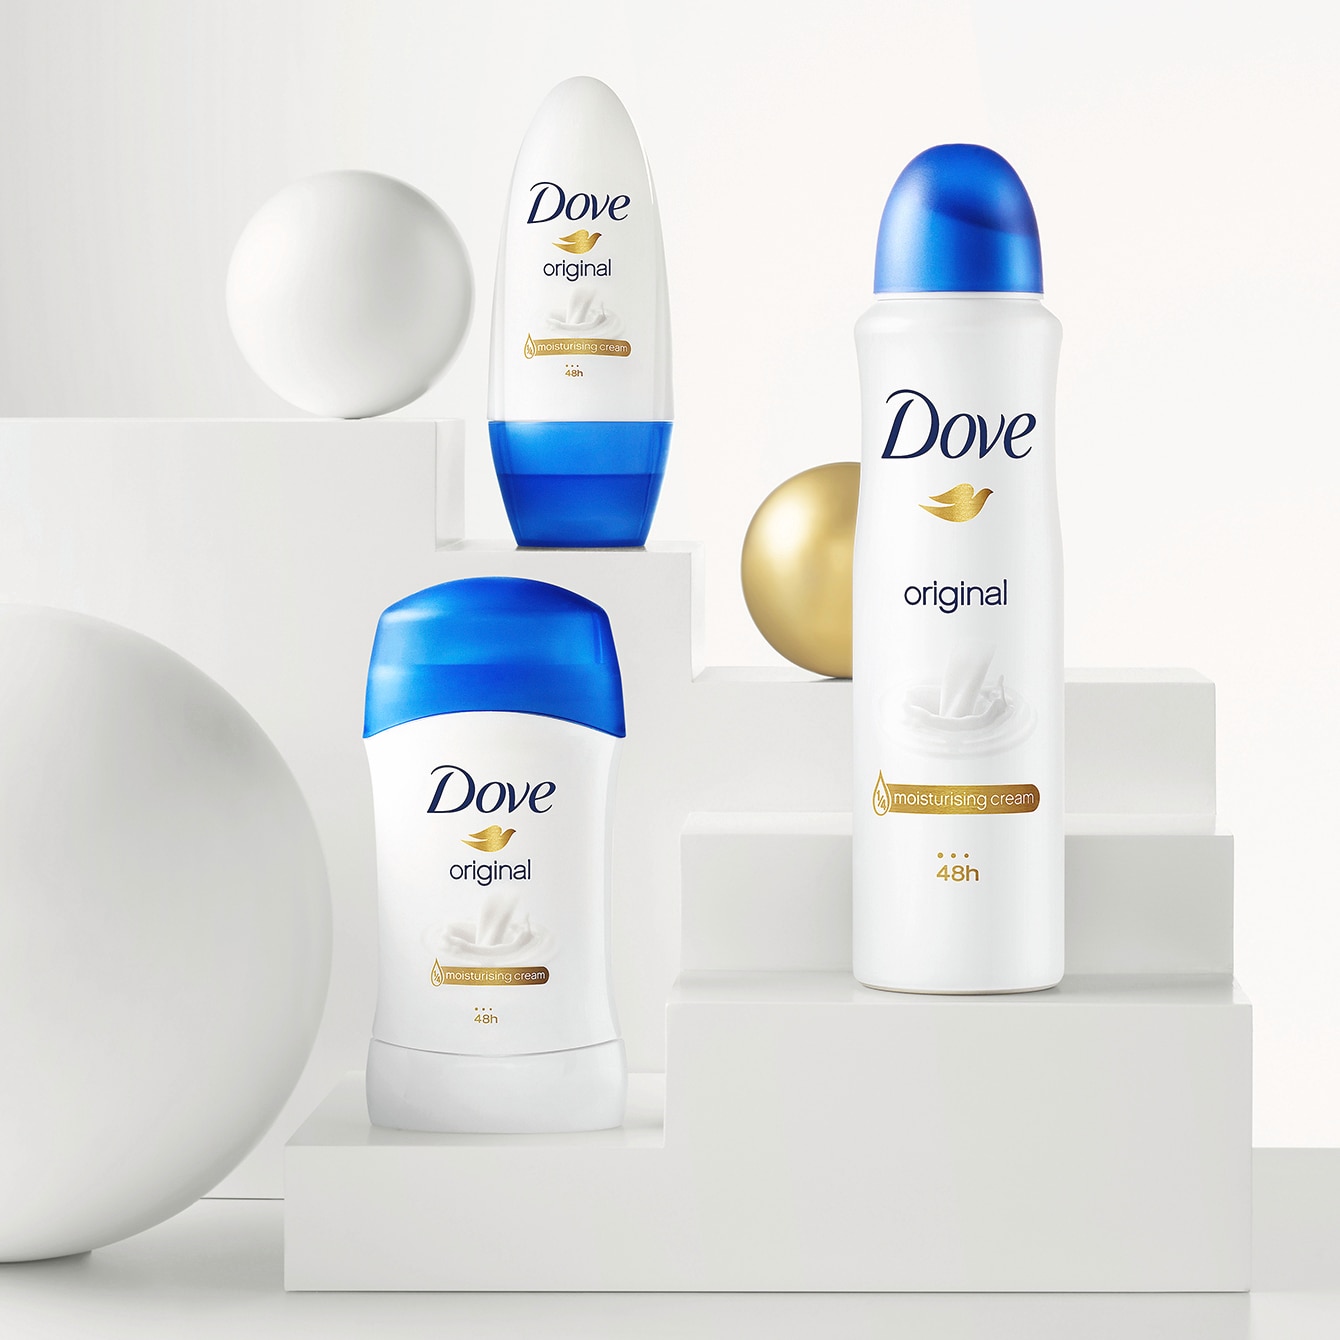 Dove Daily Moisture Shampoo and Conditioner